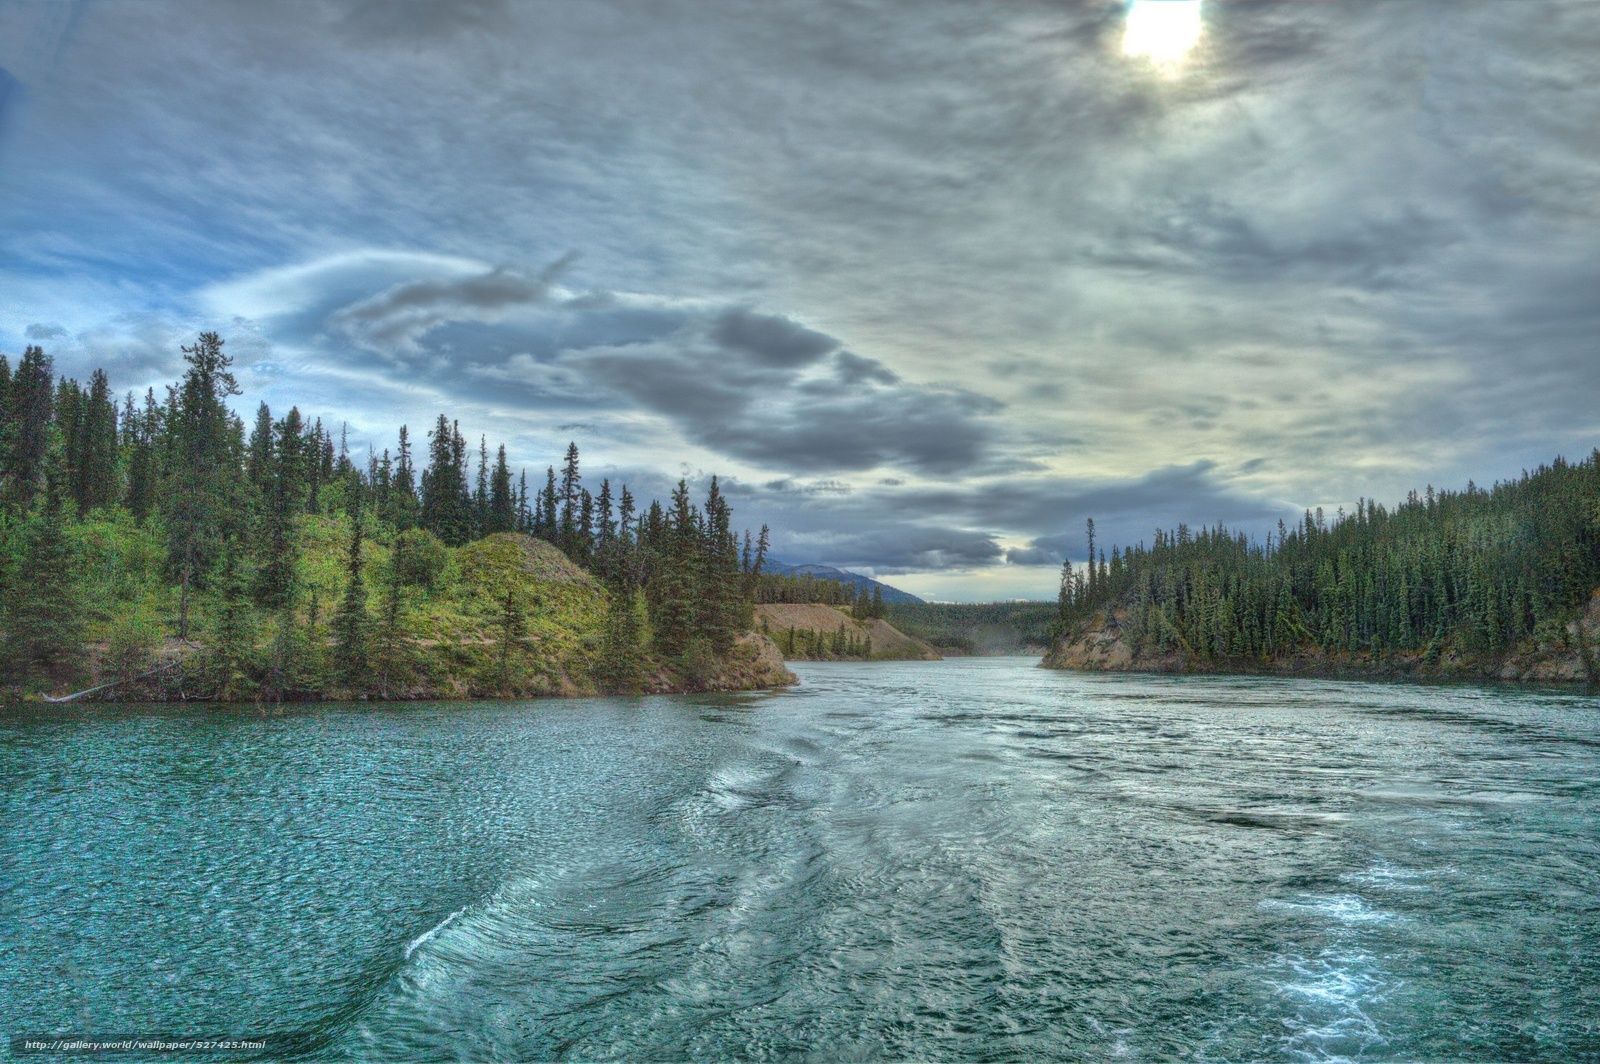 Yukon River, Canada free desktop wallpaper in the resolution 3200x2127